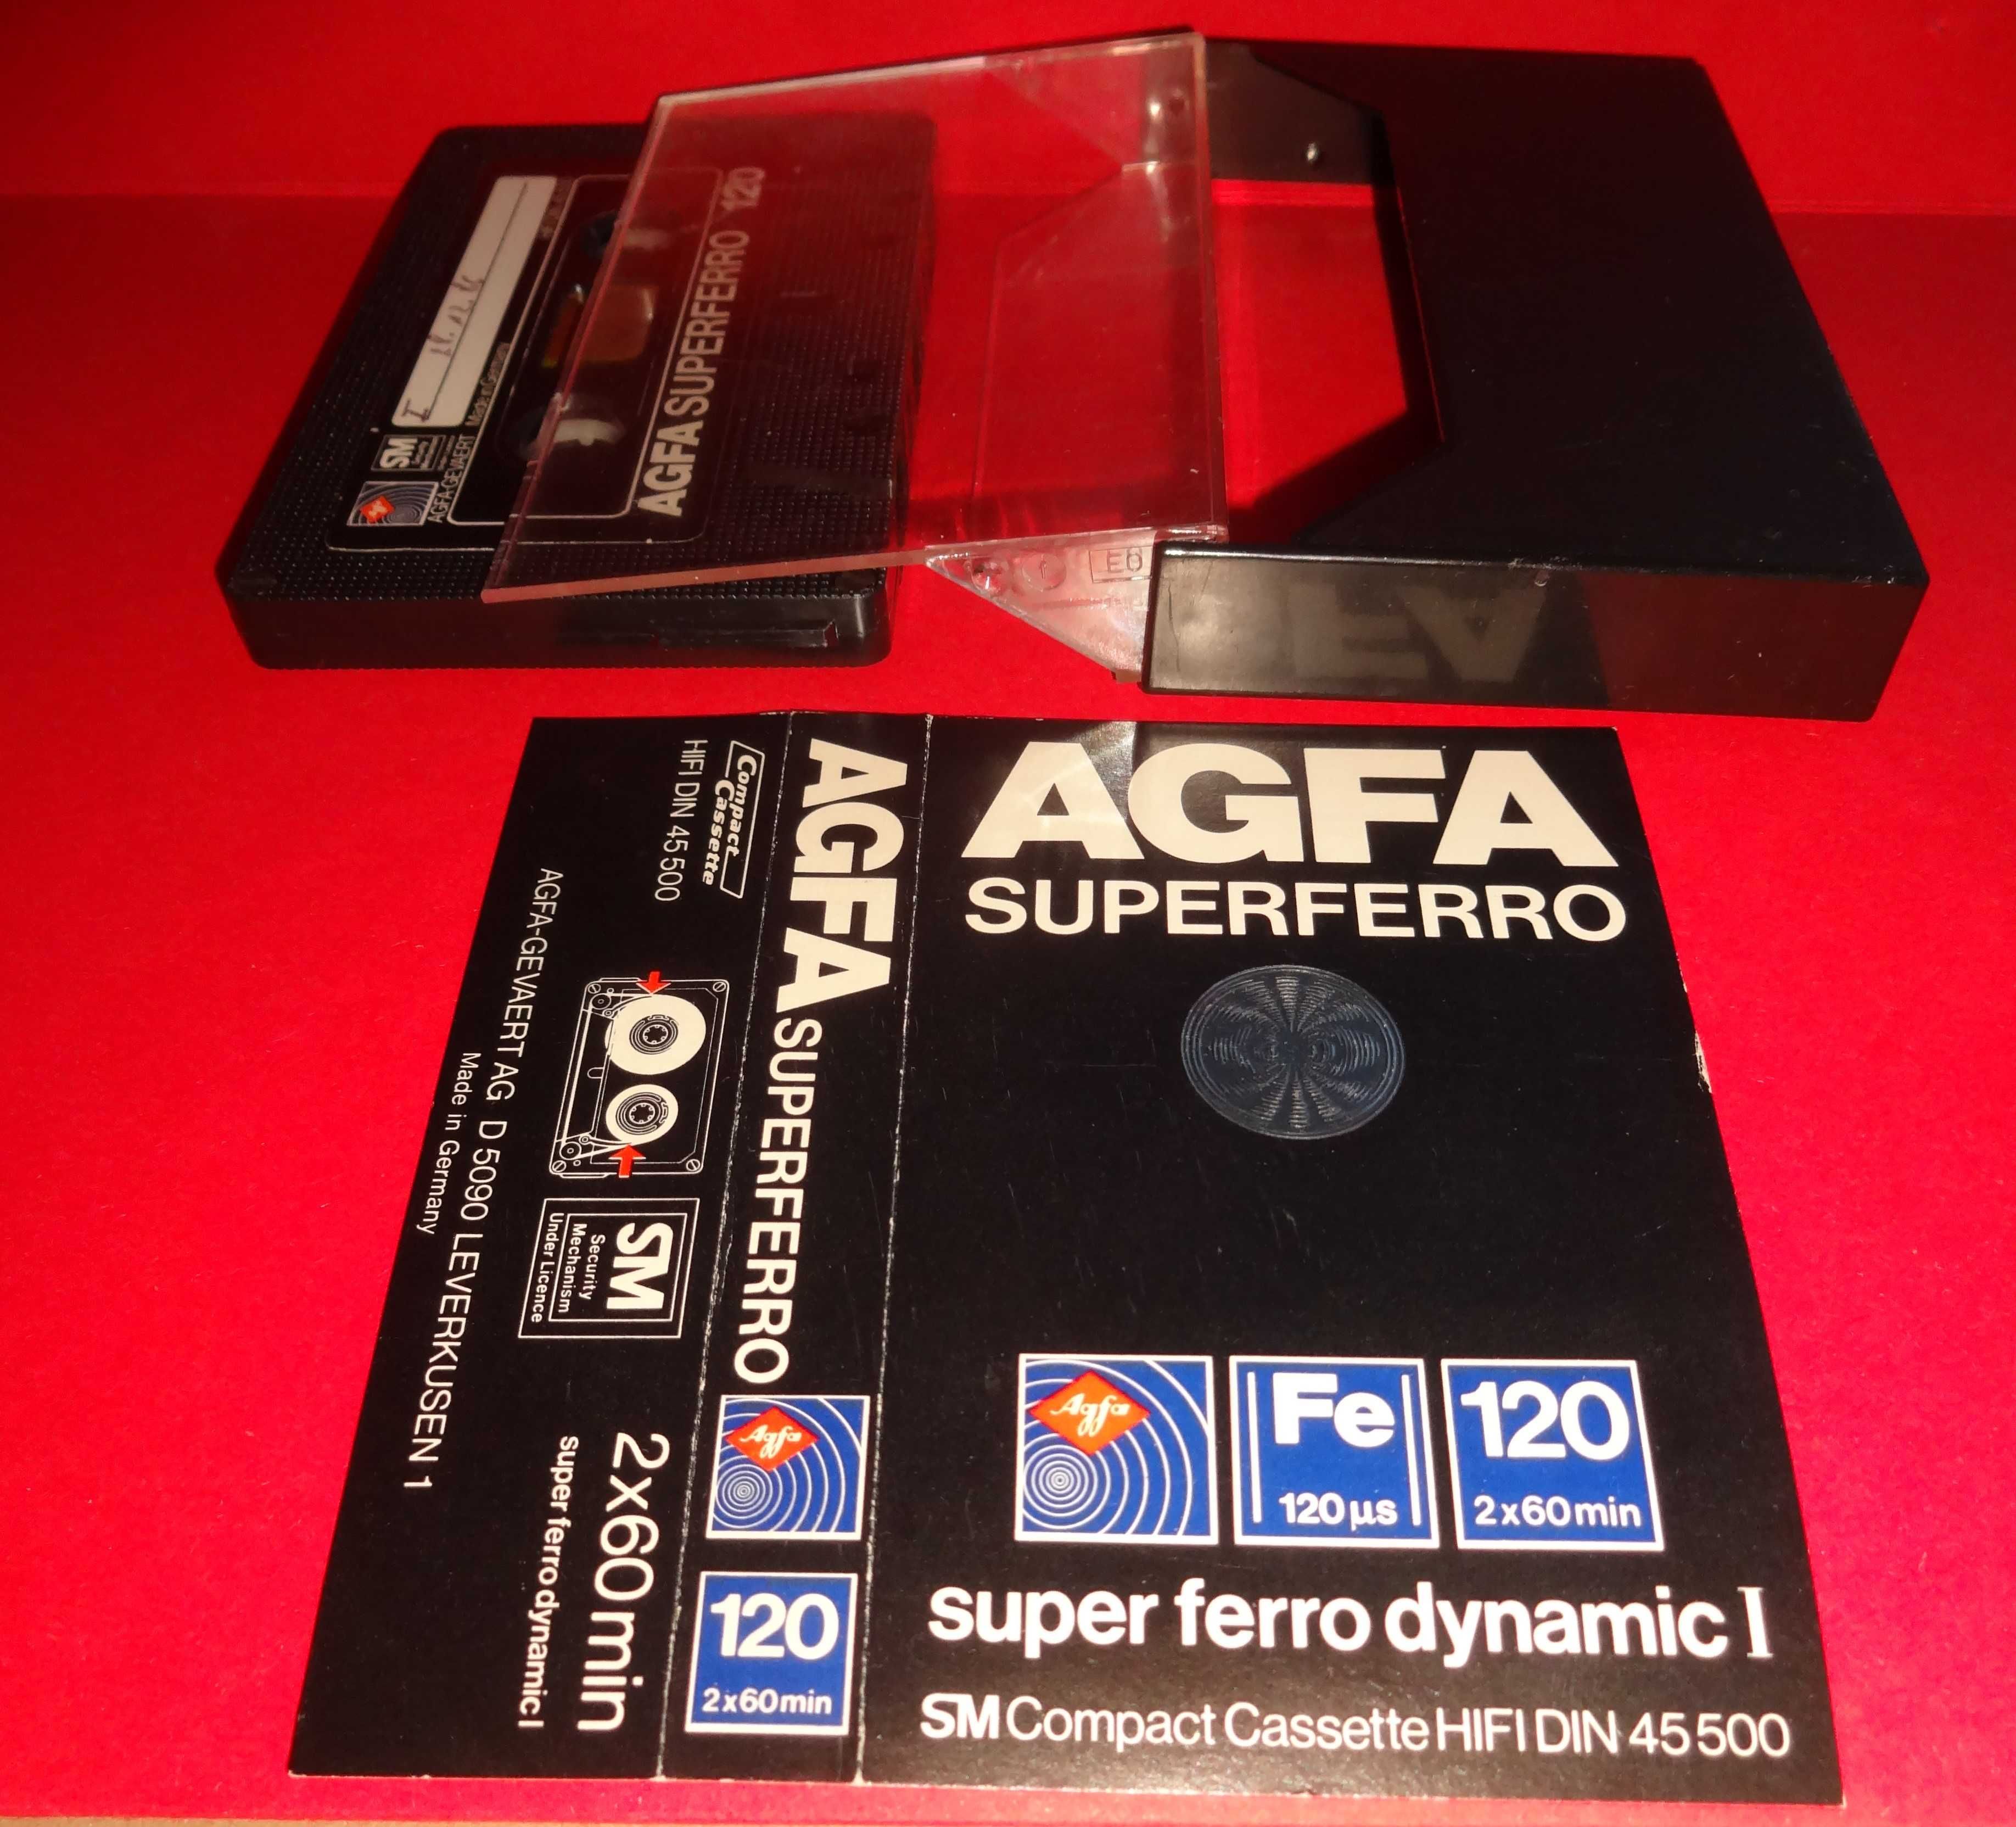 Agfa Supererro 120 - kaseta żelazowa z lat 1980 - 82, made in Germany